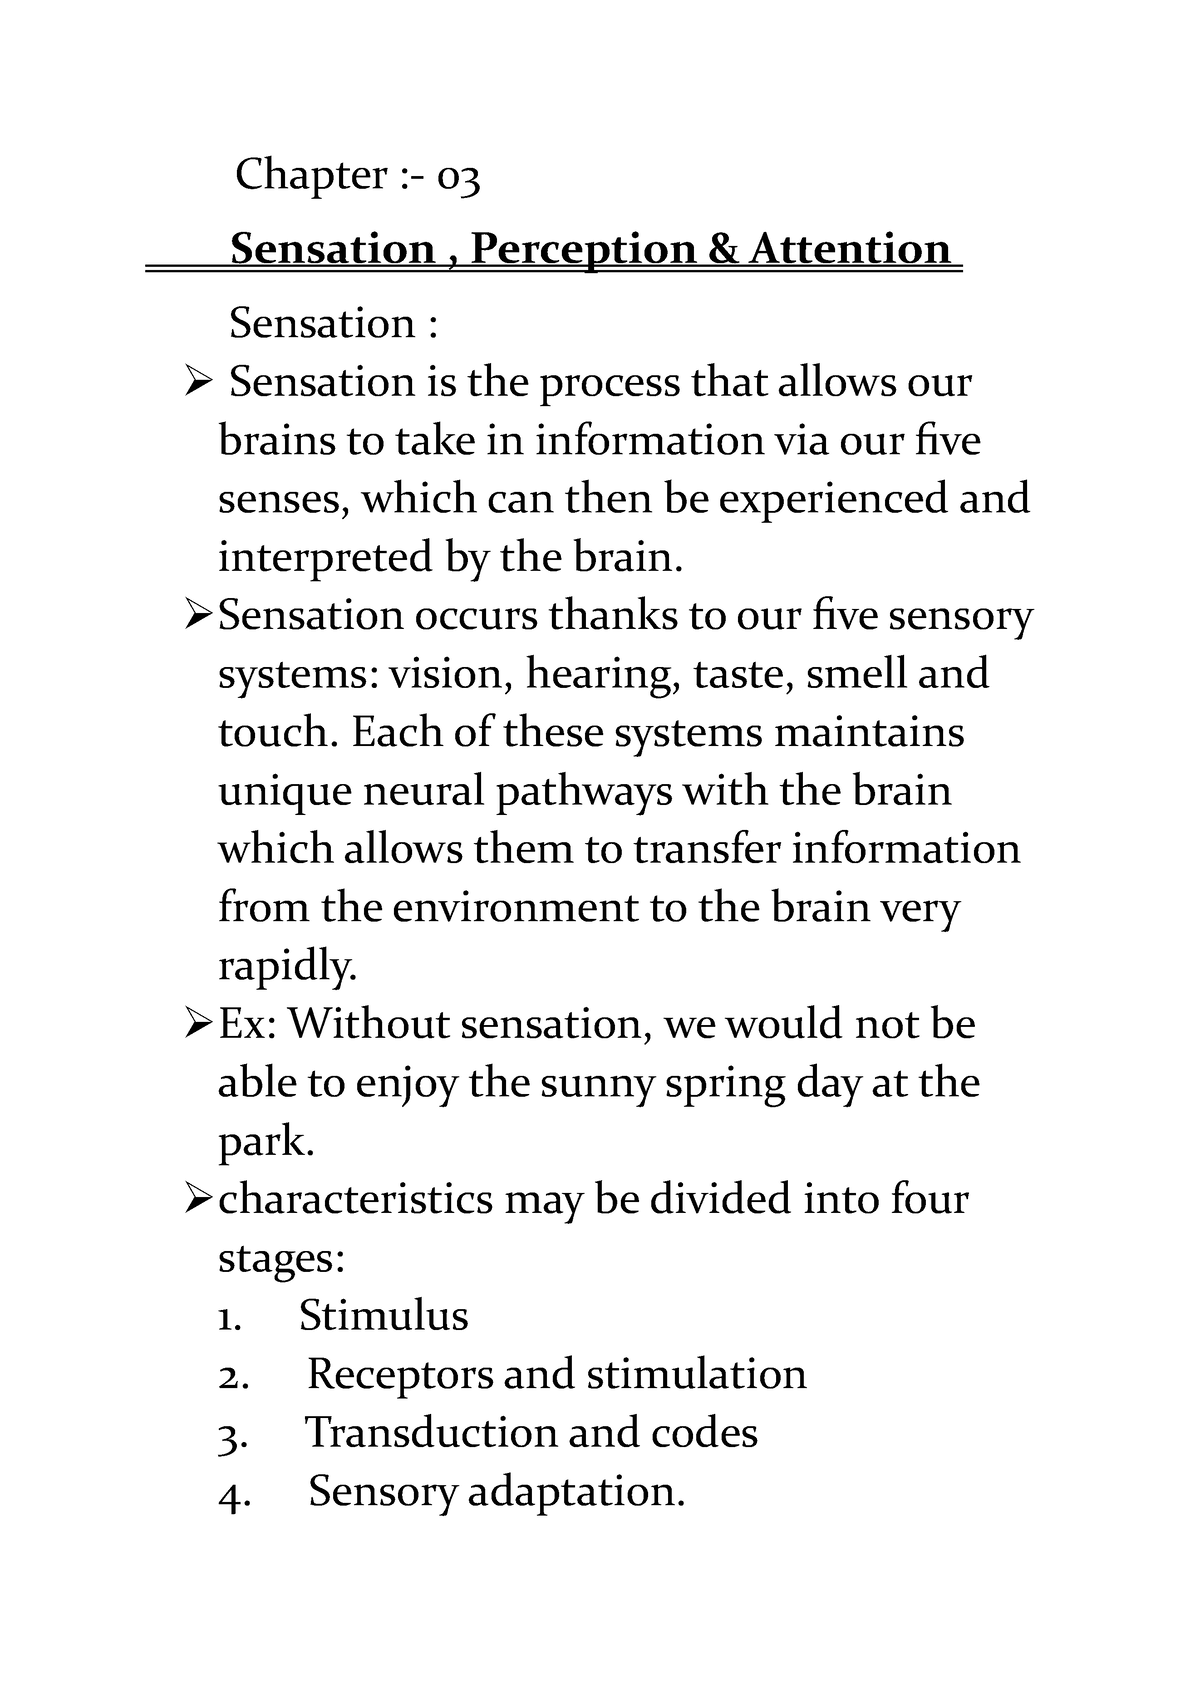 sensation and perception psychology essay